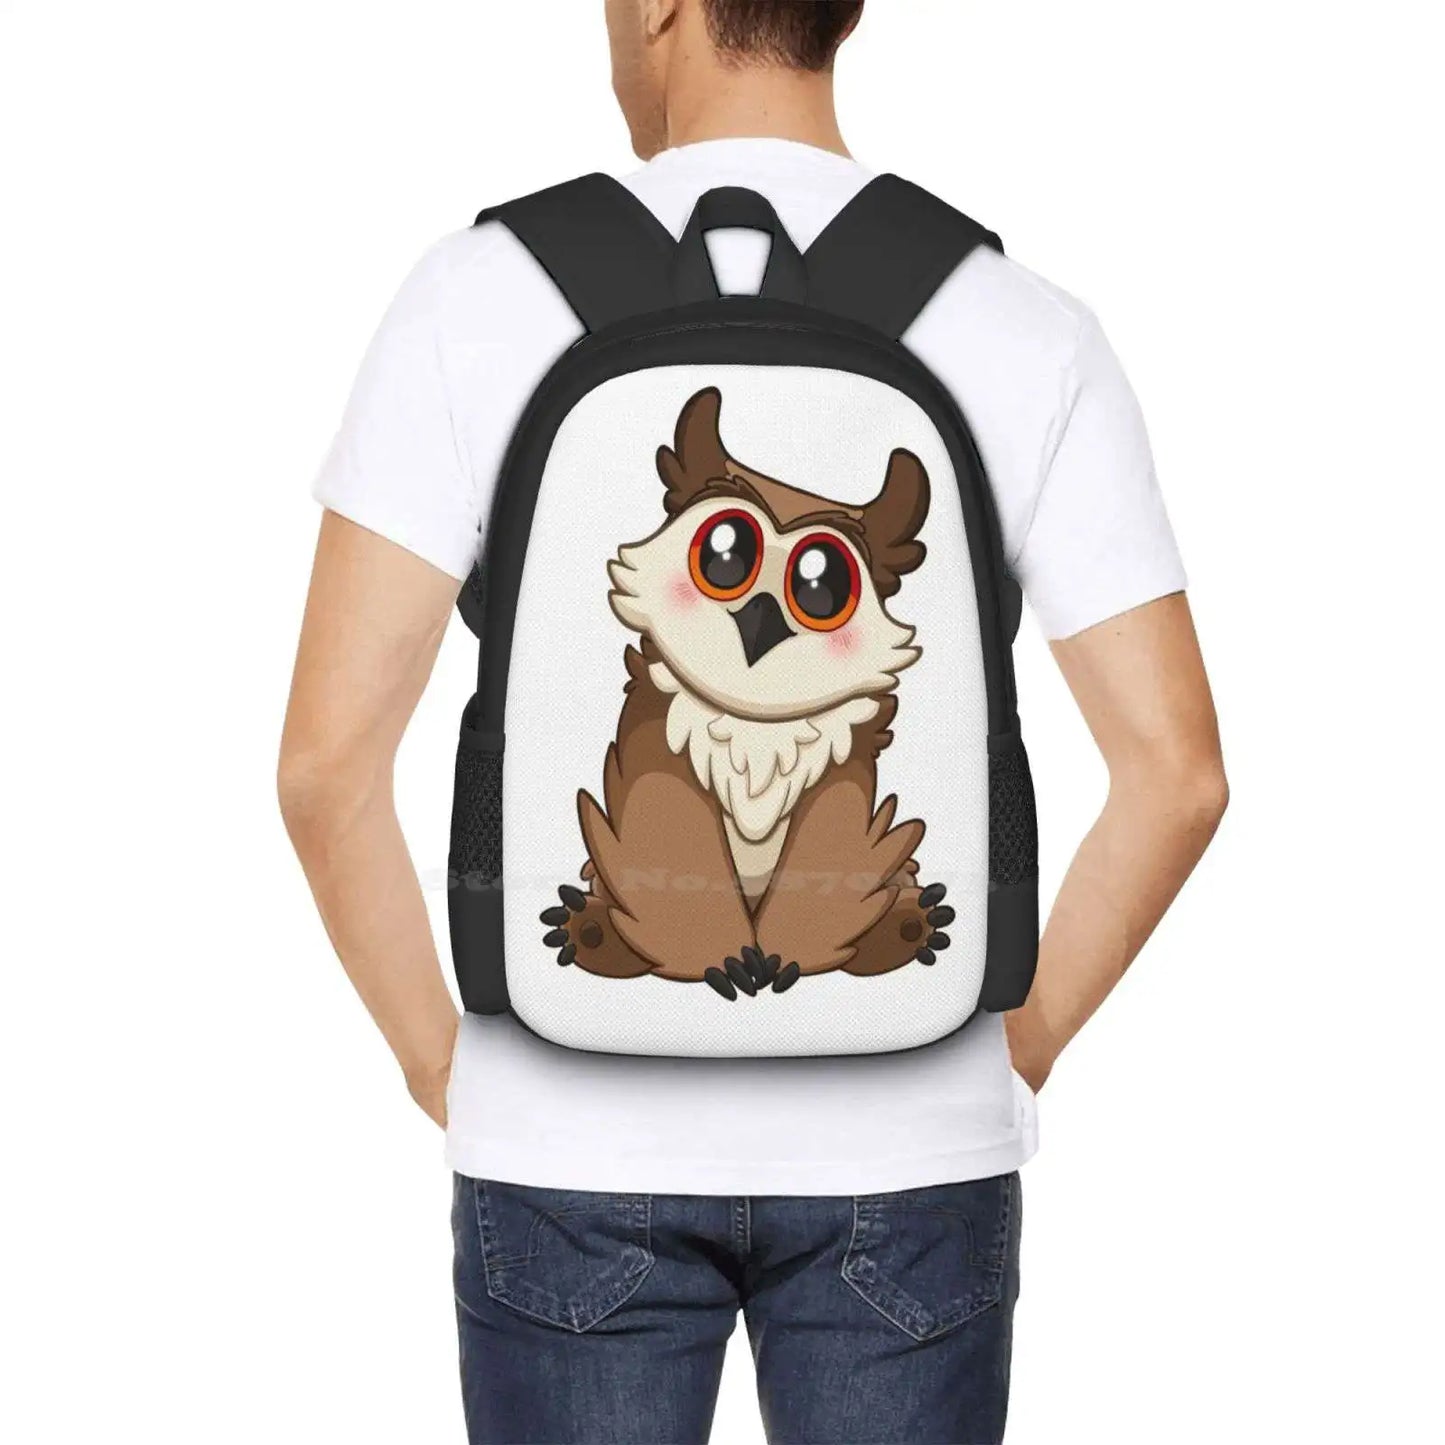 Adorable Owlbear - Cute D&D Adventures School Bags Travel Laptop Backpack Owlbear Owl Bear And Dragons Dnd Waffles Waffle Crew